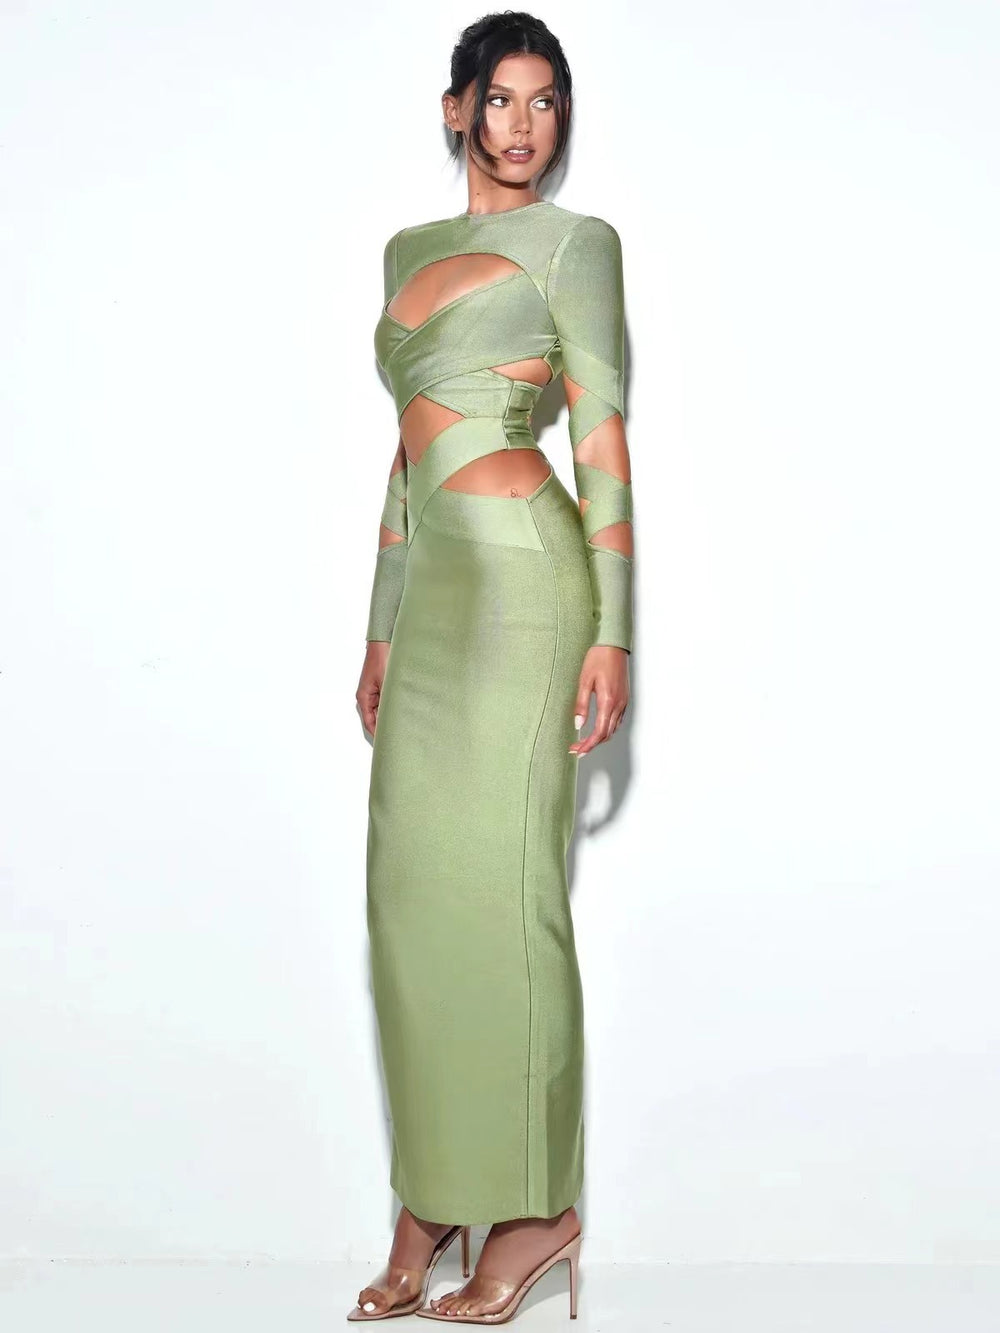 Socialite Low Cut Bandage CrissCross Cropped Outfit Hollow Out Cutout Long Slim Dress